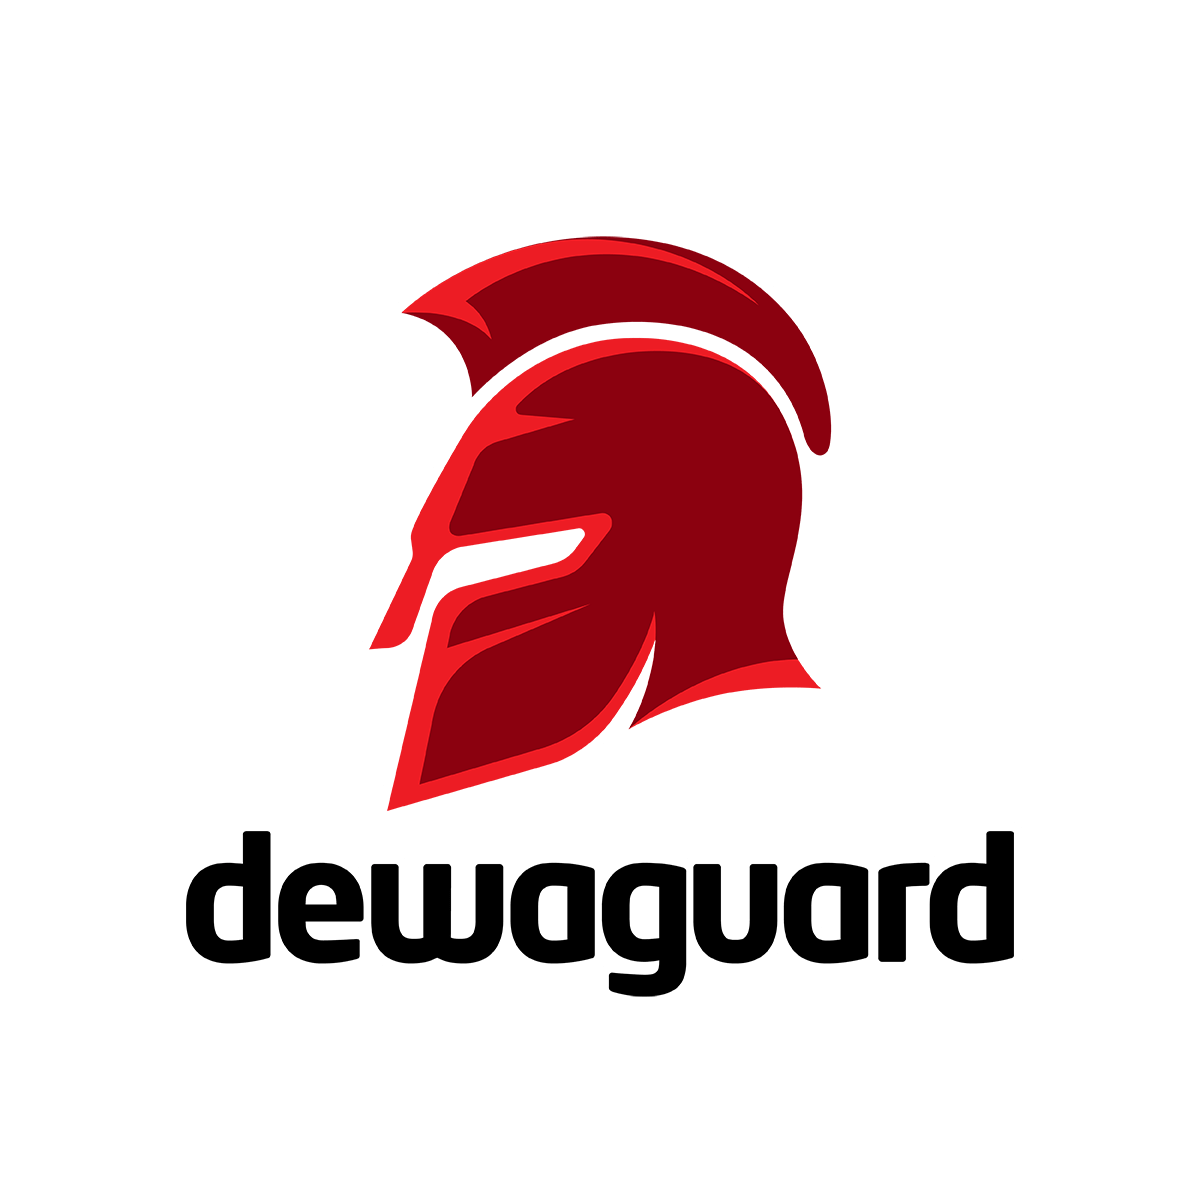 dewaguard-logo